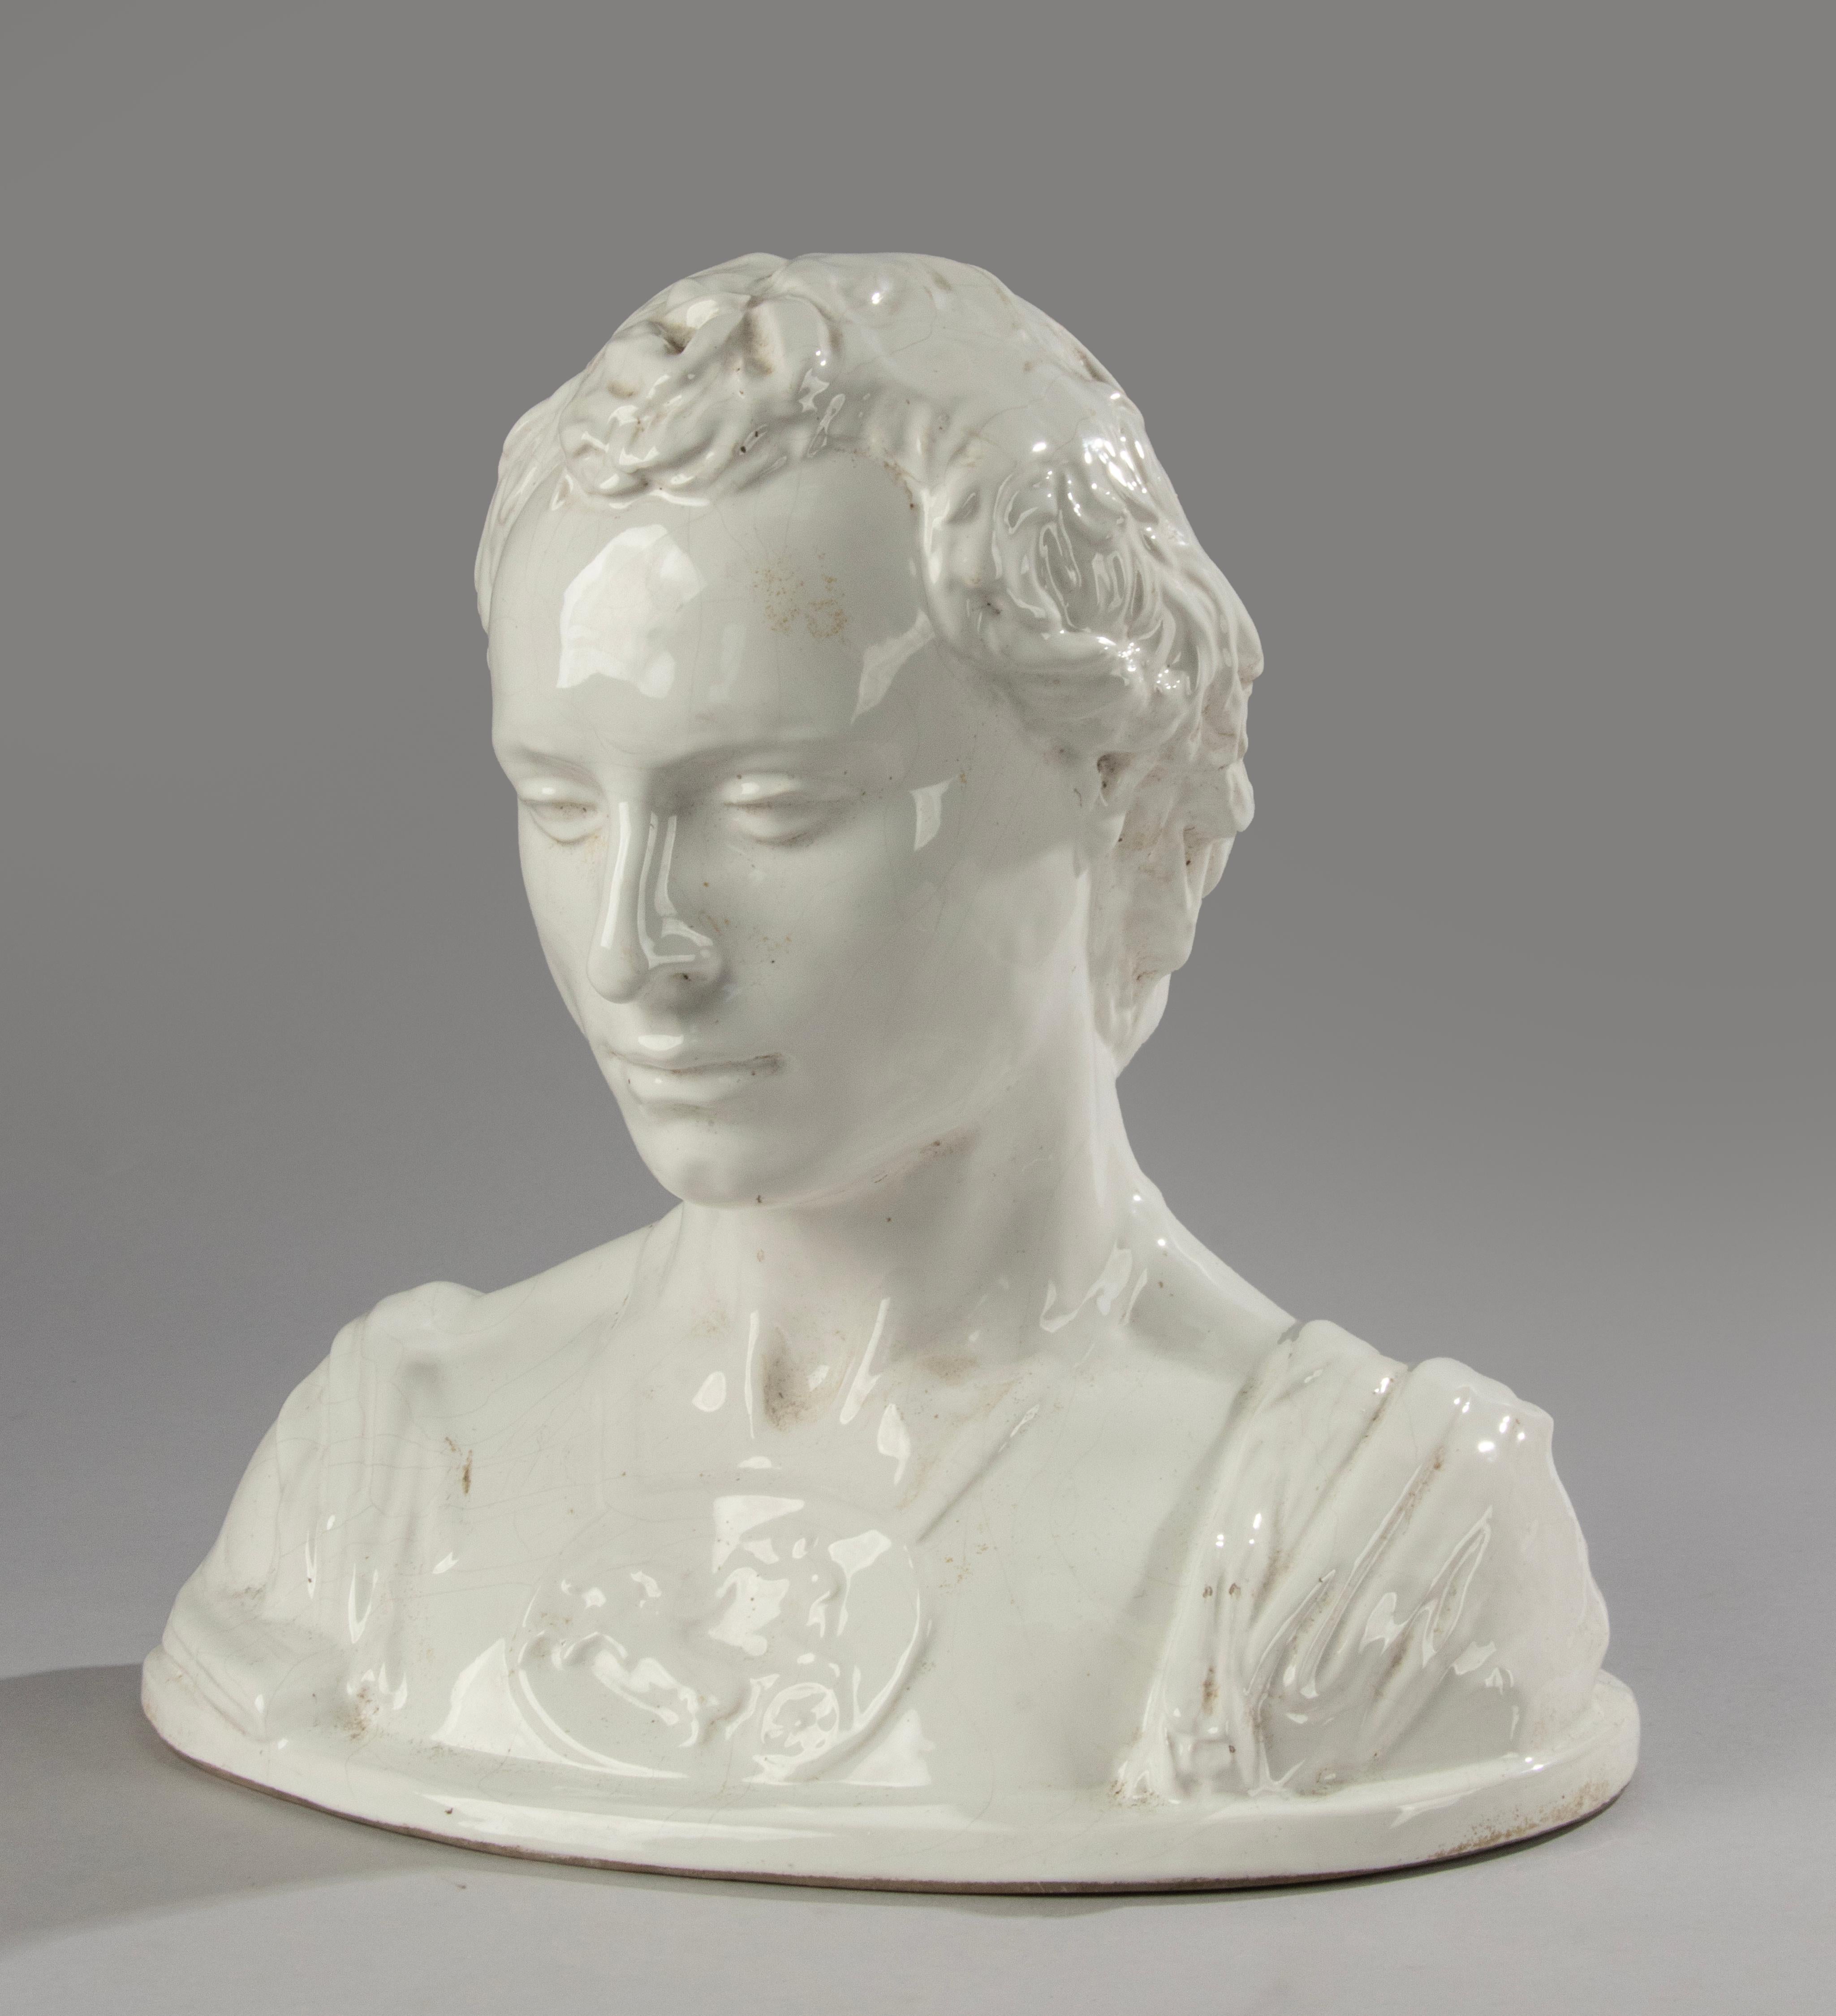 Italian Majolica ceramic Bust of a Man - Roman Empire Style For Sale 14